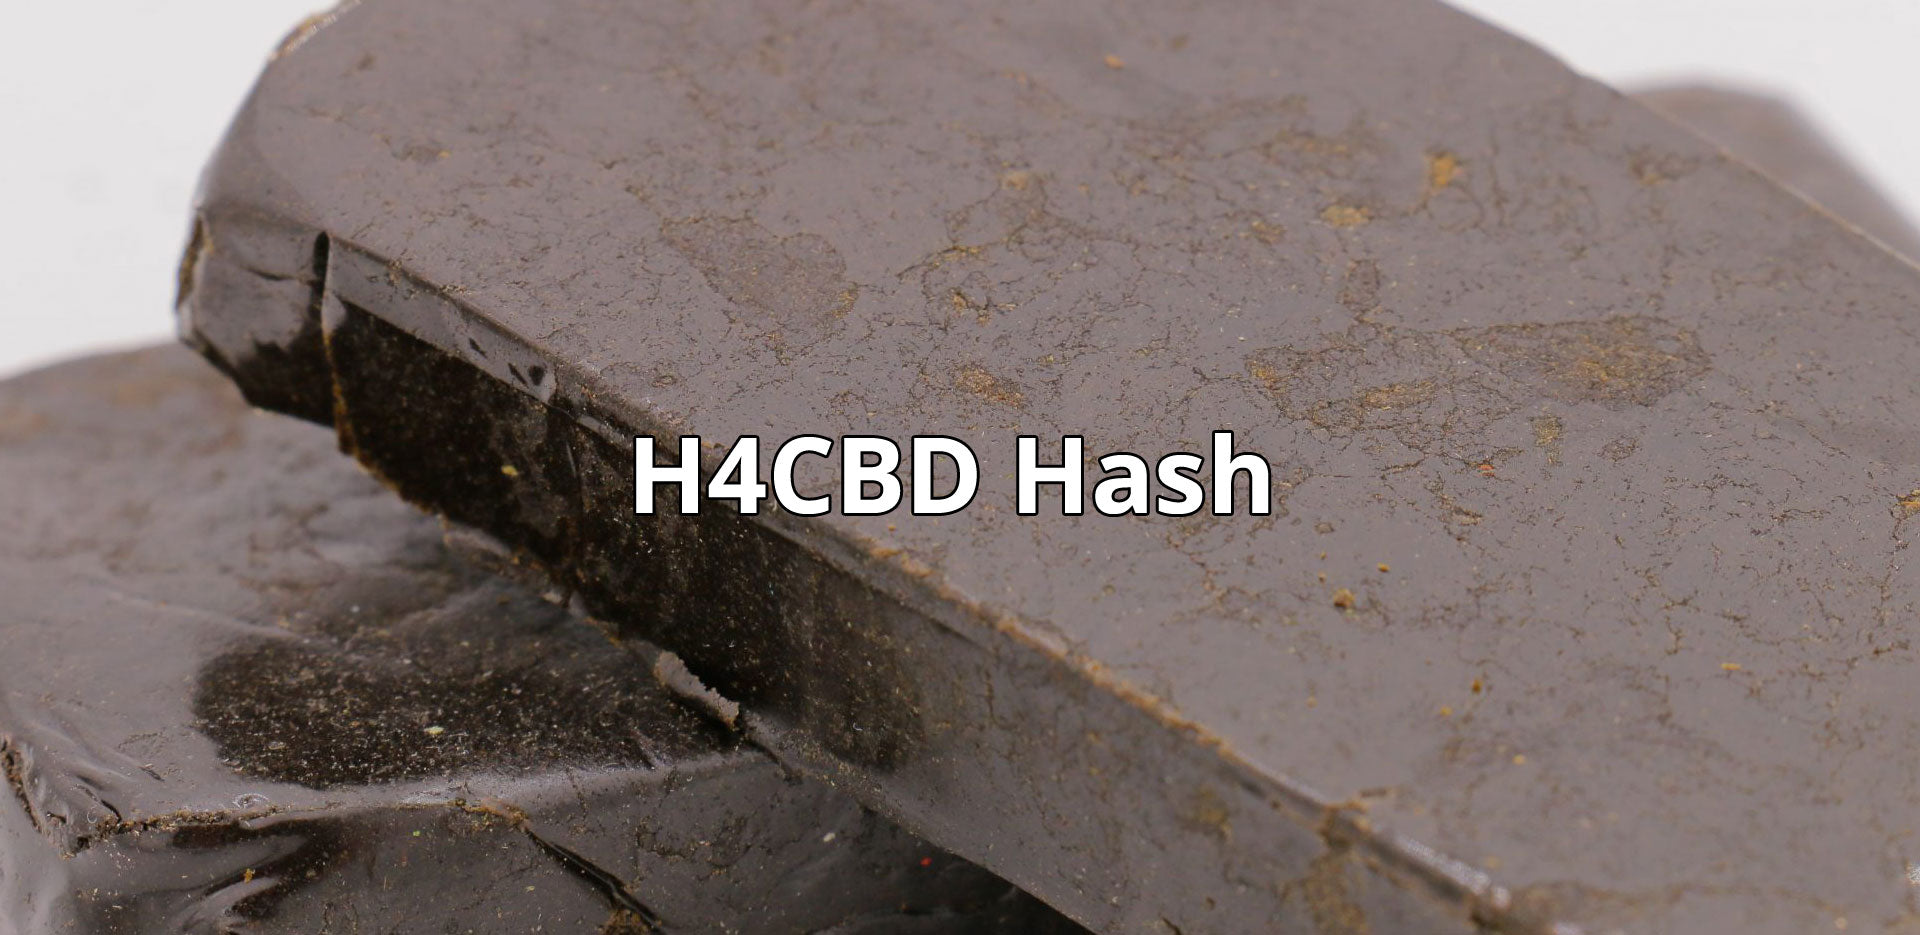 H4CBD Hash, muss man probiert haben